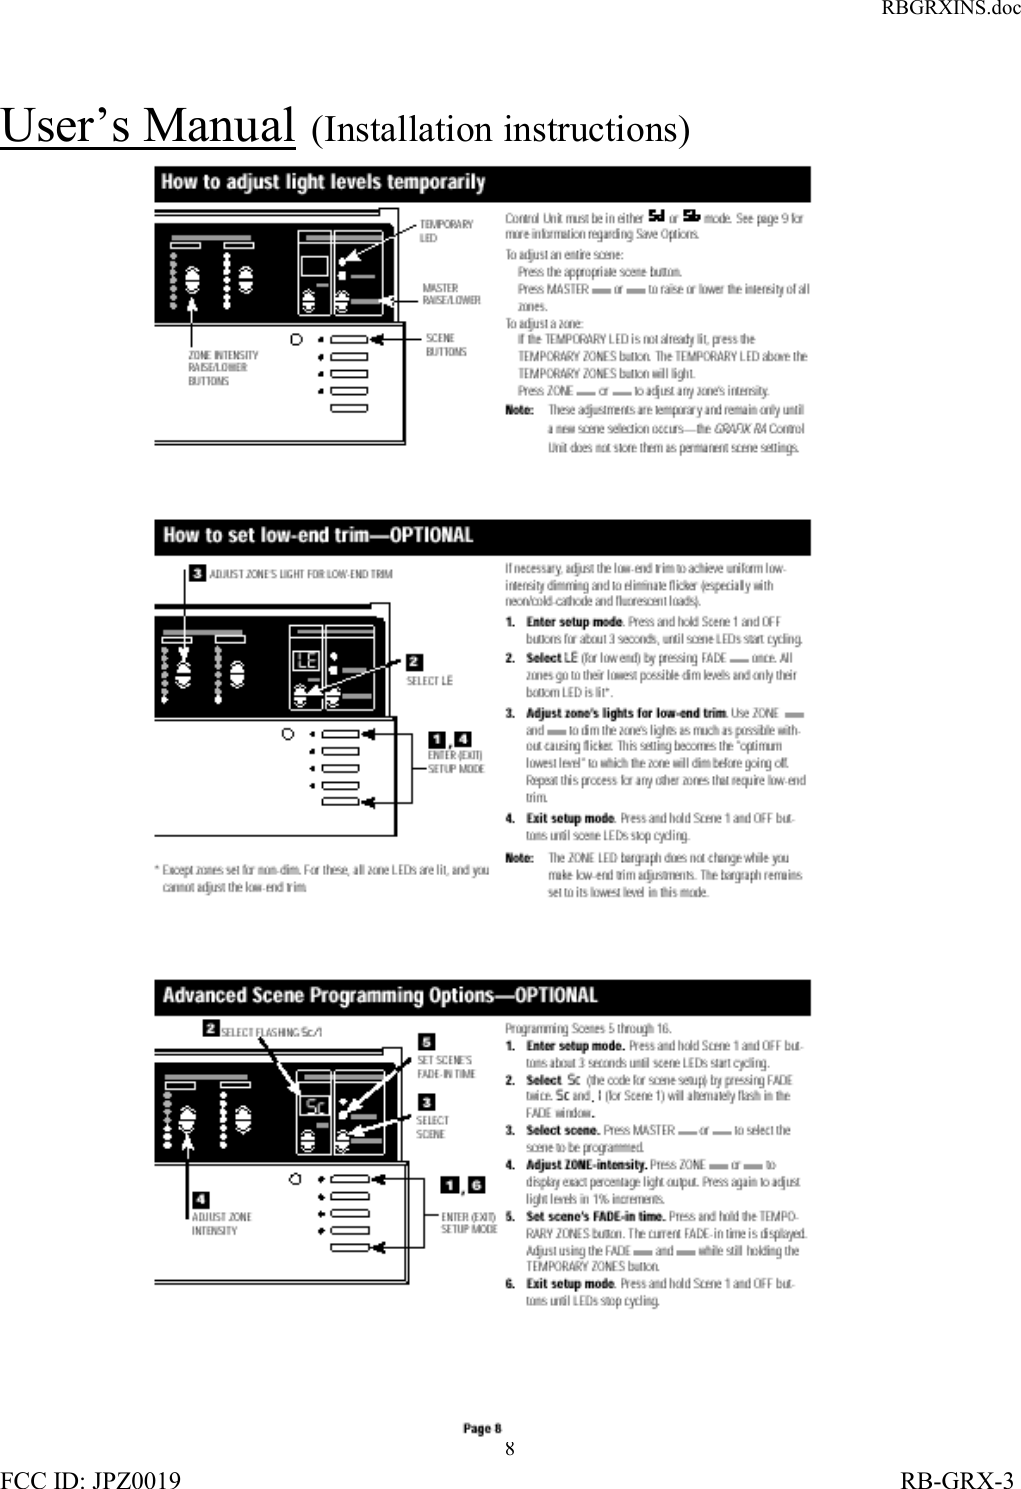 RBGRXINS.docFCC ID: JPZ0019                                                                                                                   RB-GRX-38User’s Manual  (Installation instructions)